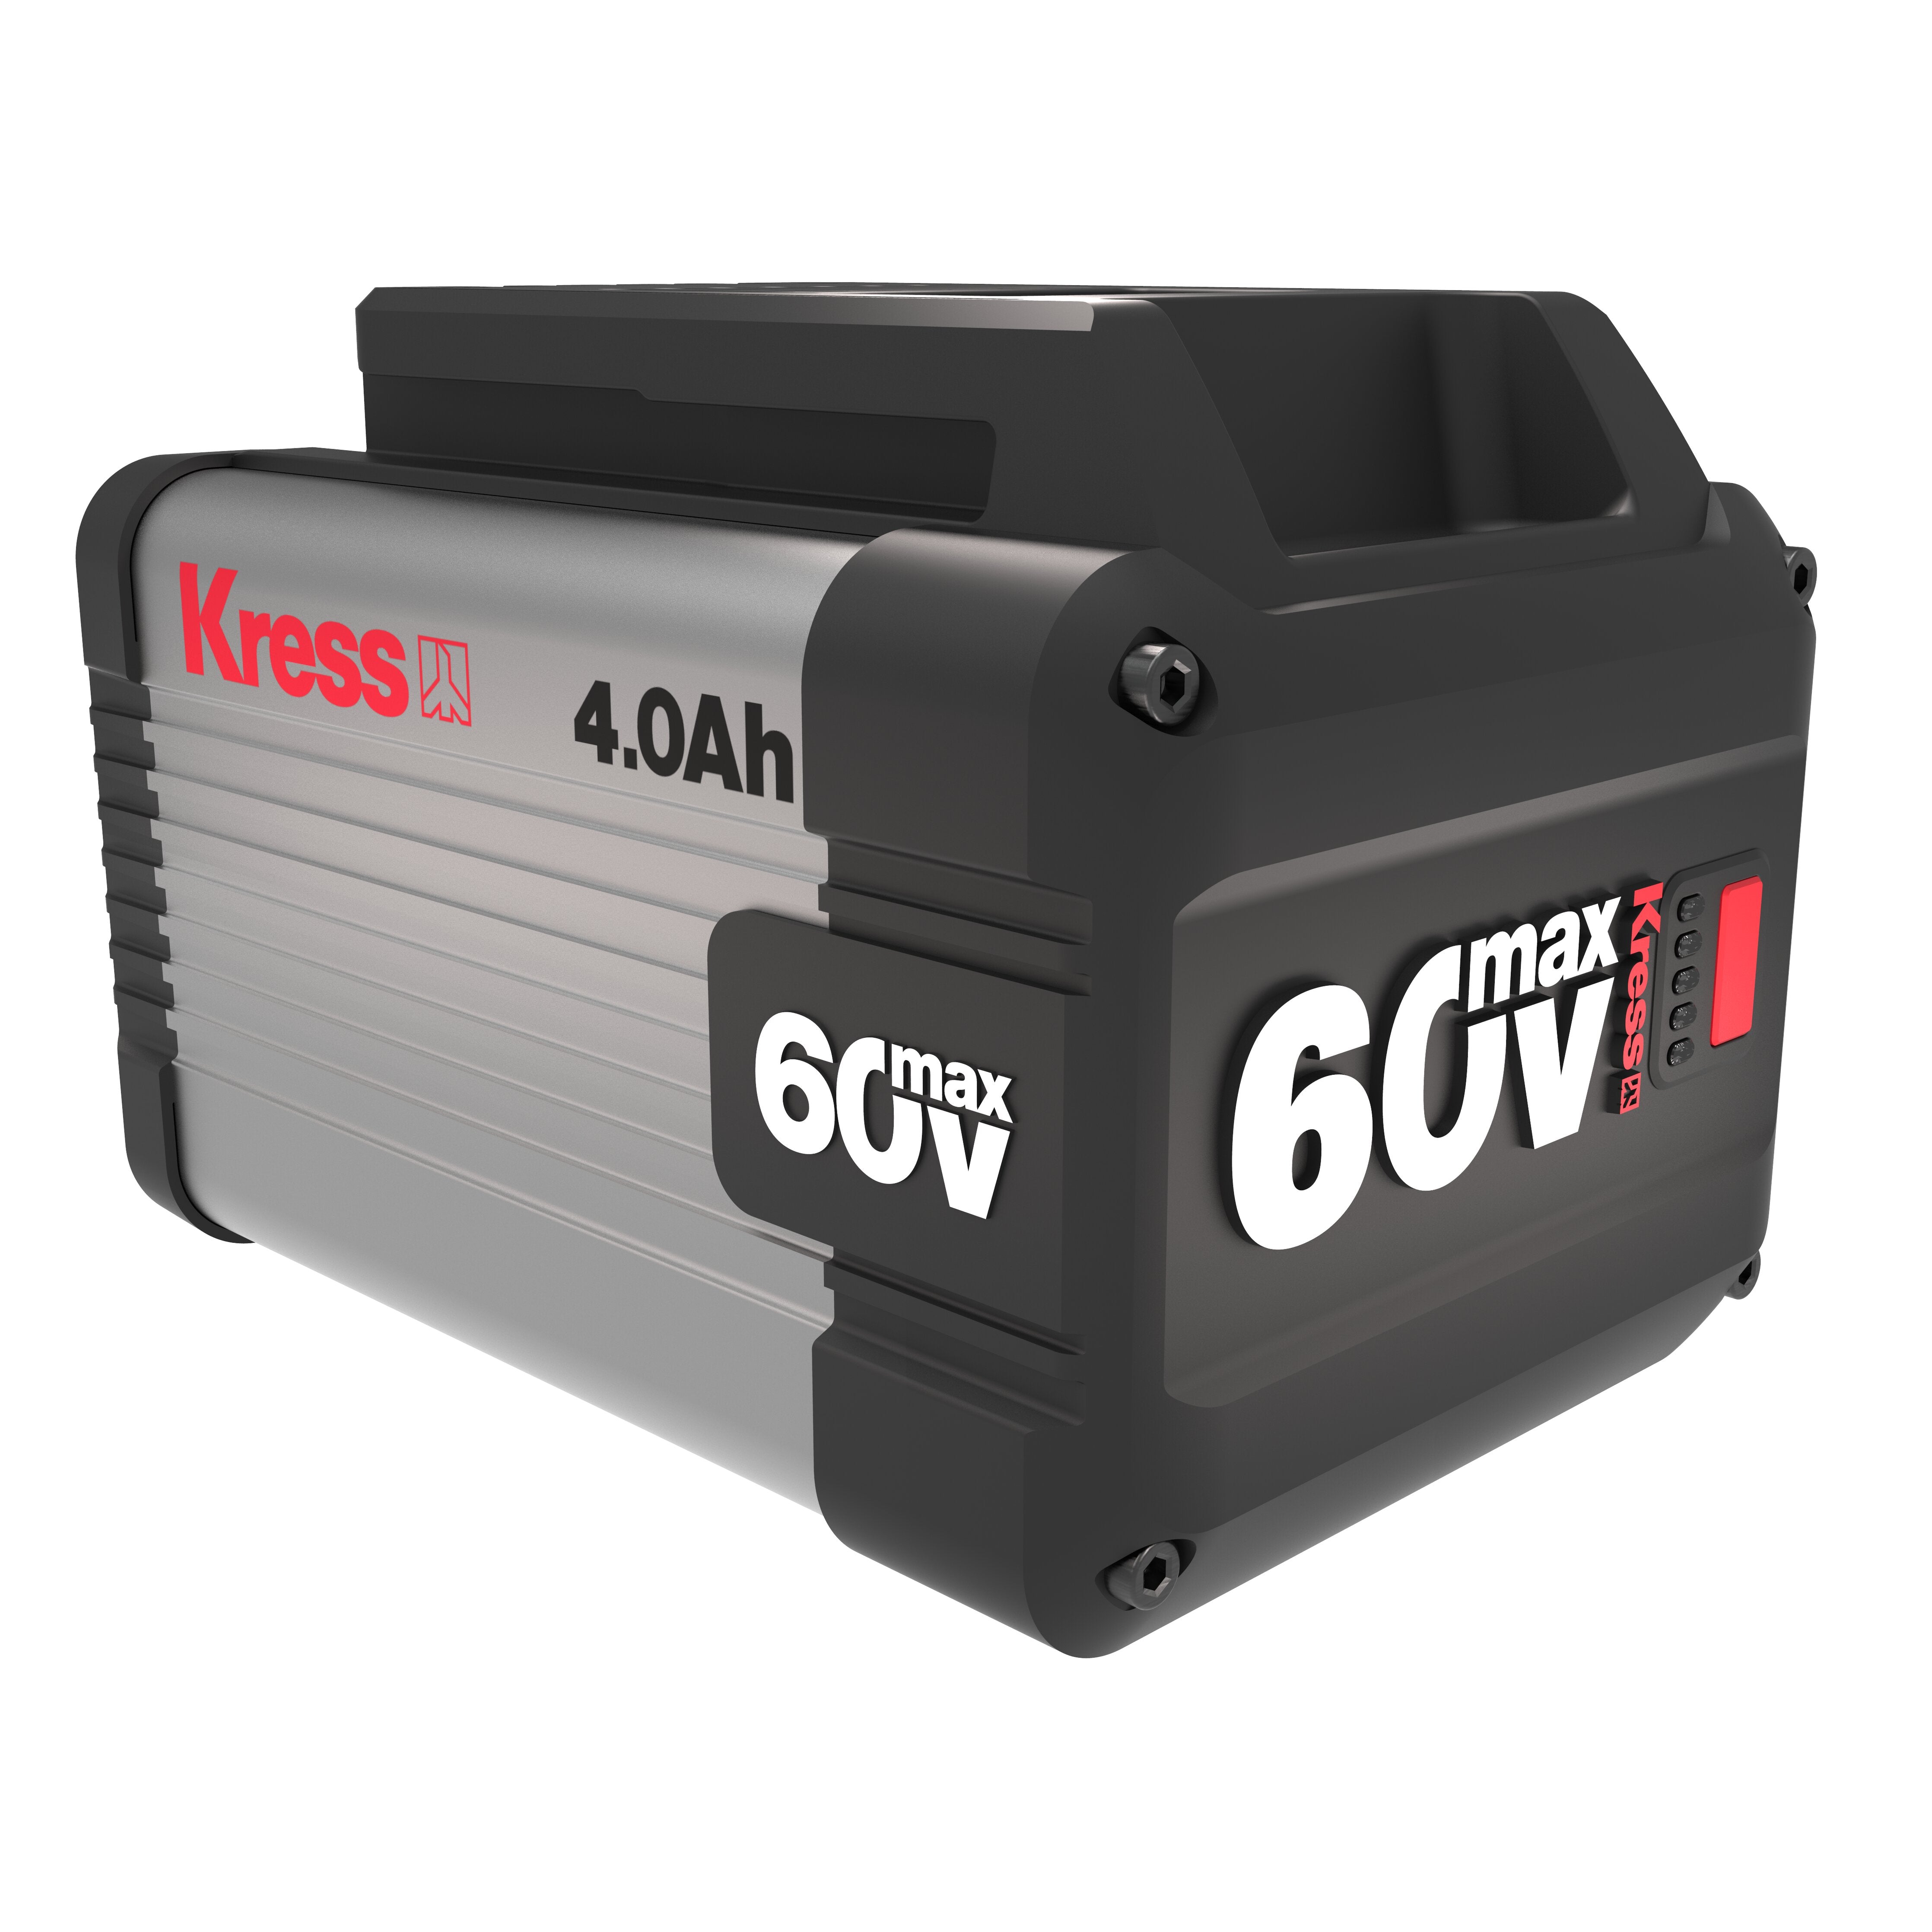 Kress Akku-Laubbläser 60V - SET (inkl. Akku + Ladegerät) - KG560E